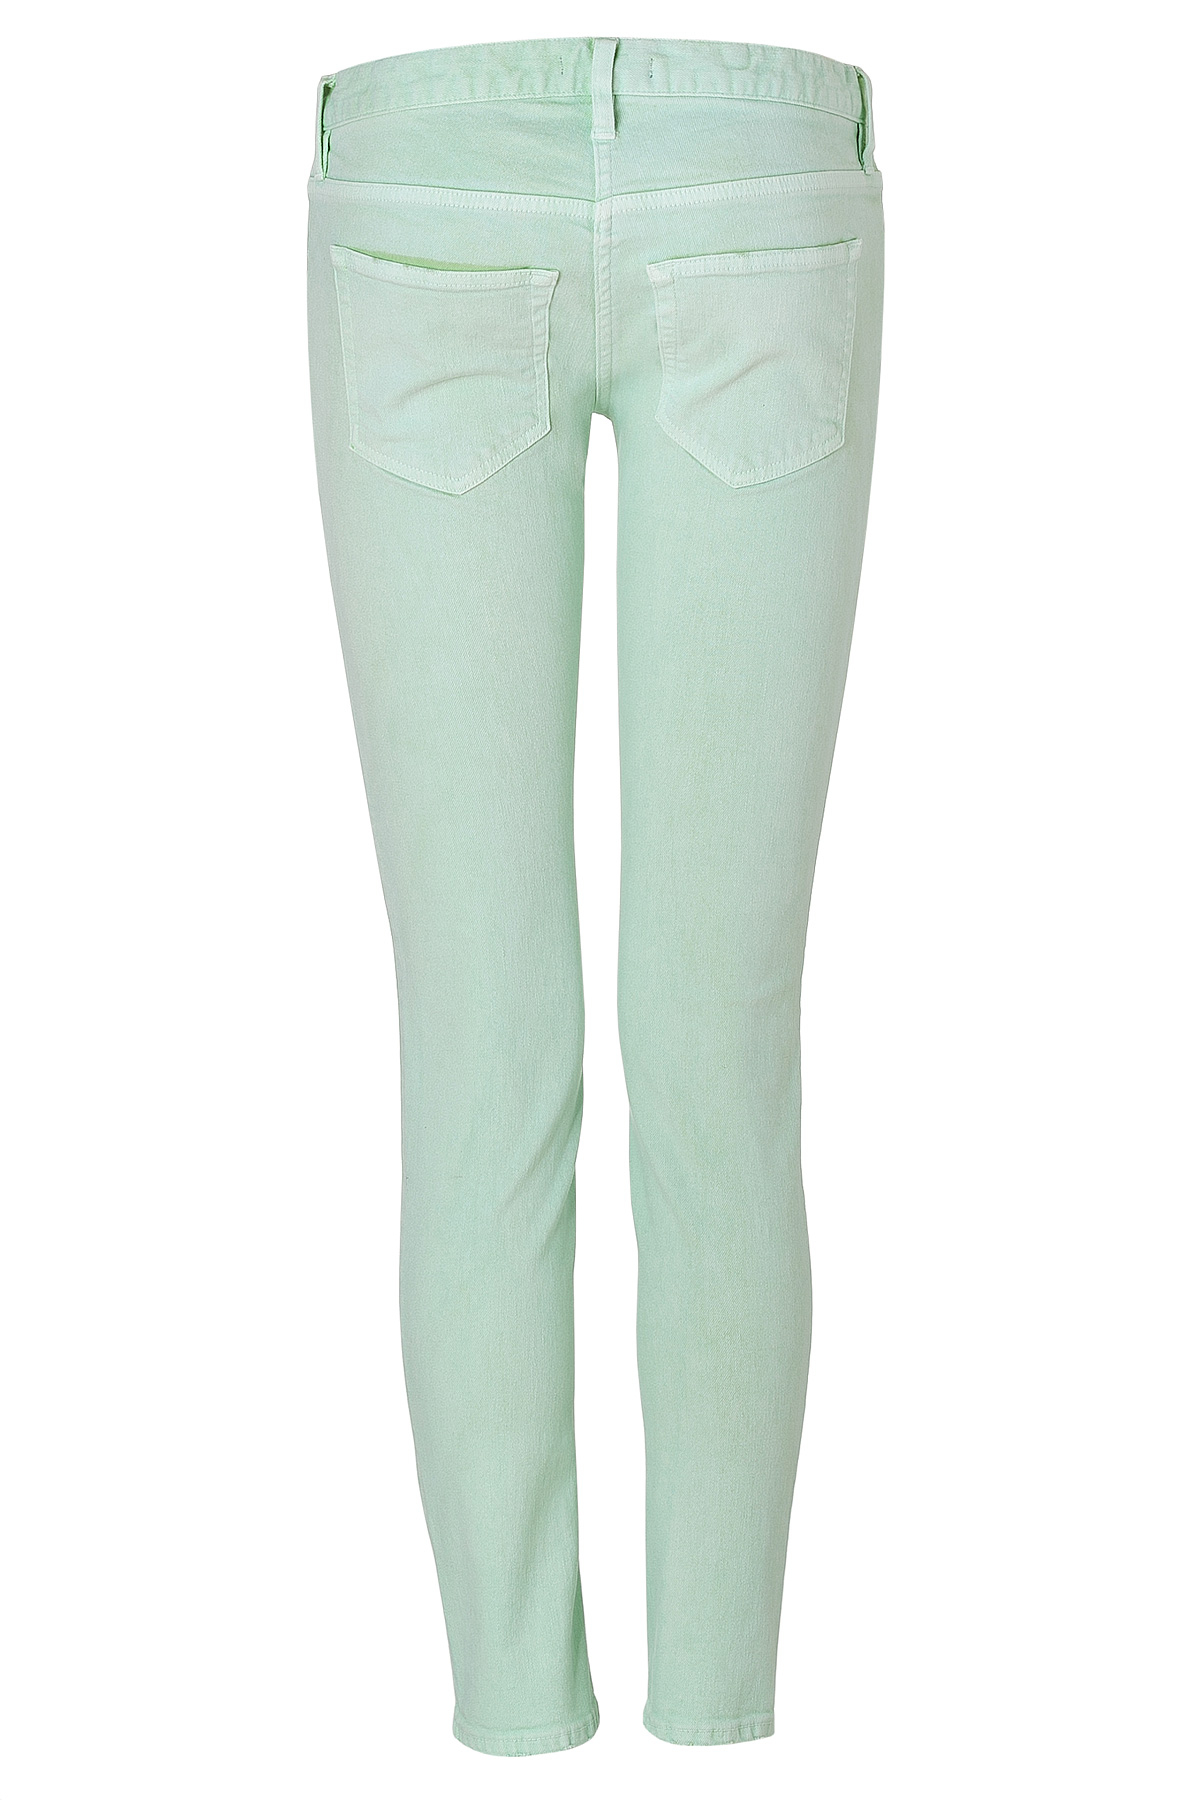 Lyst - Balmain Pale Mint Mid-rise Slim Jeans - Green in Green